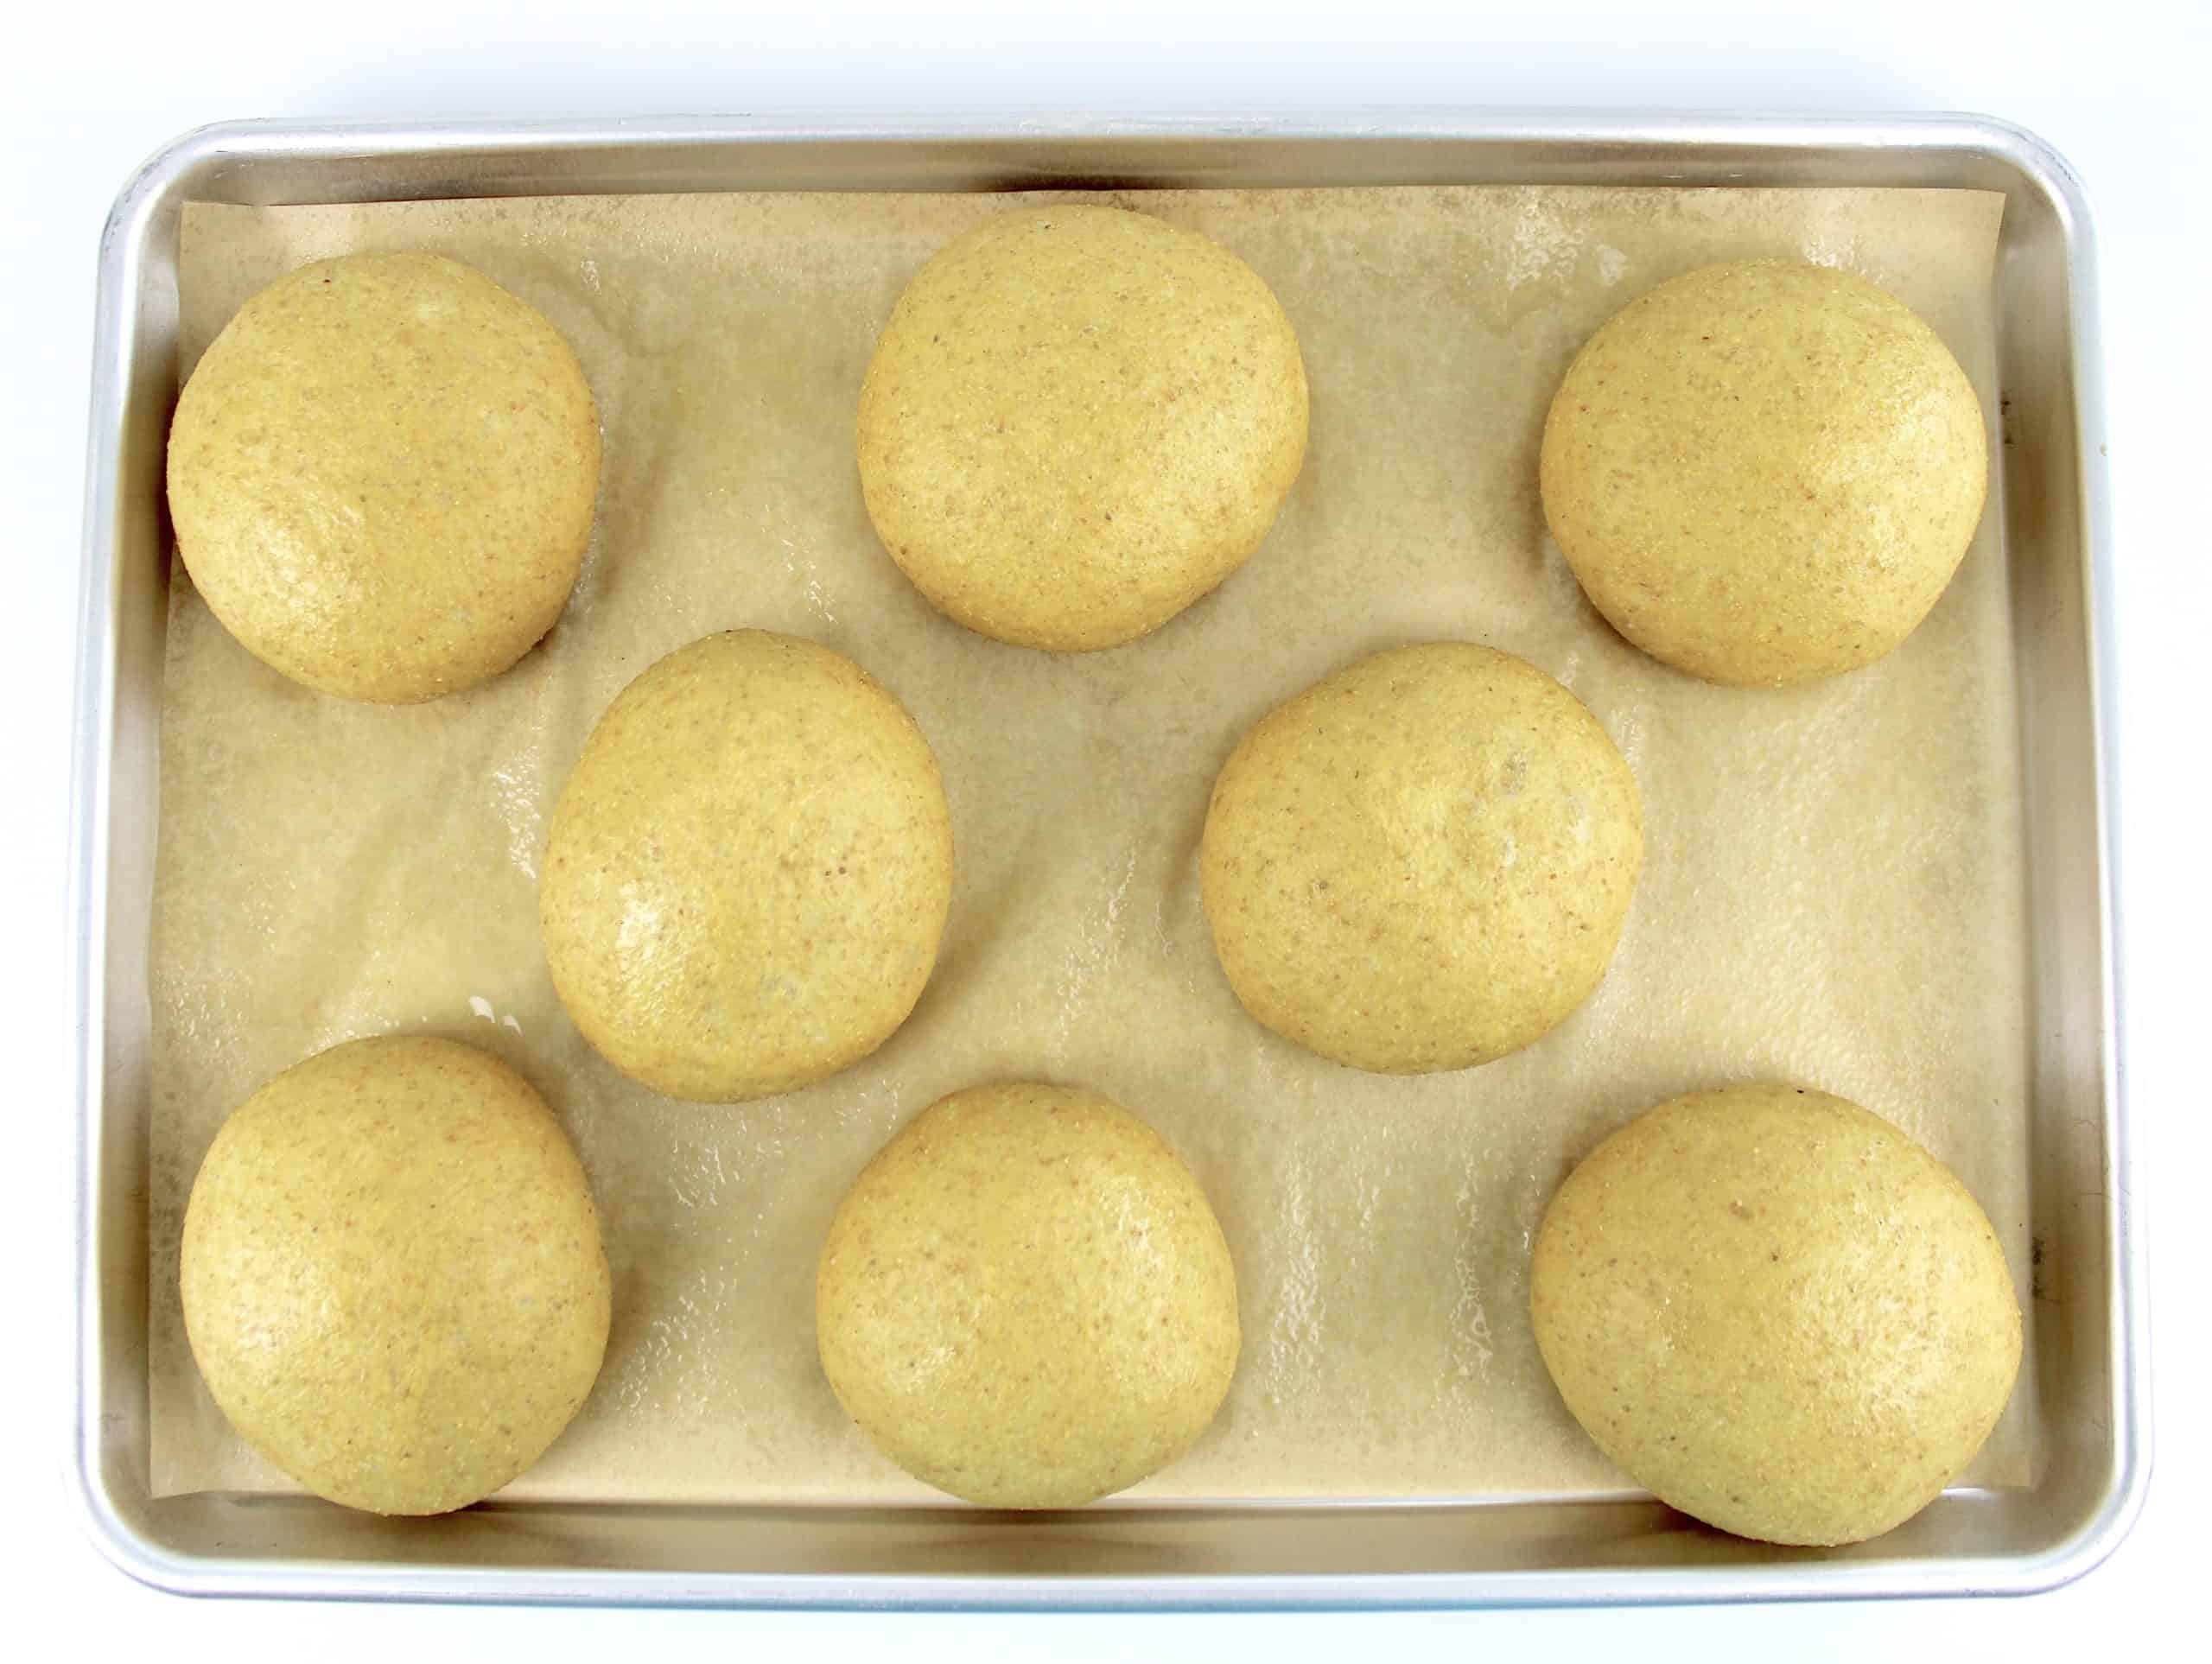 8 dough balls on parchment lined baking sheet